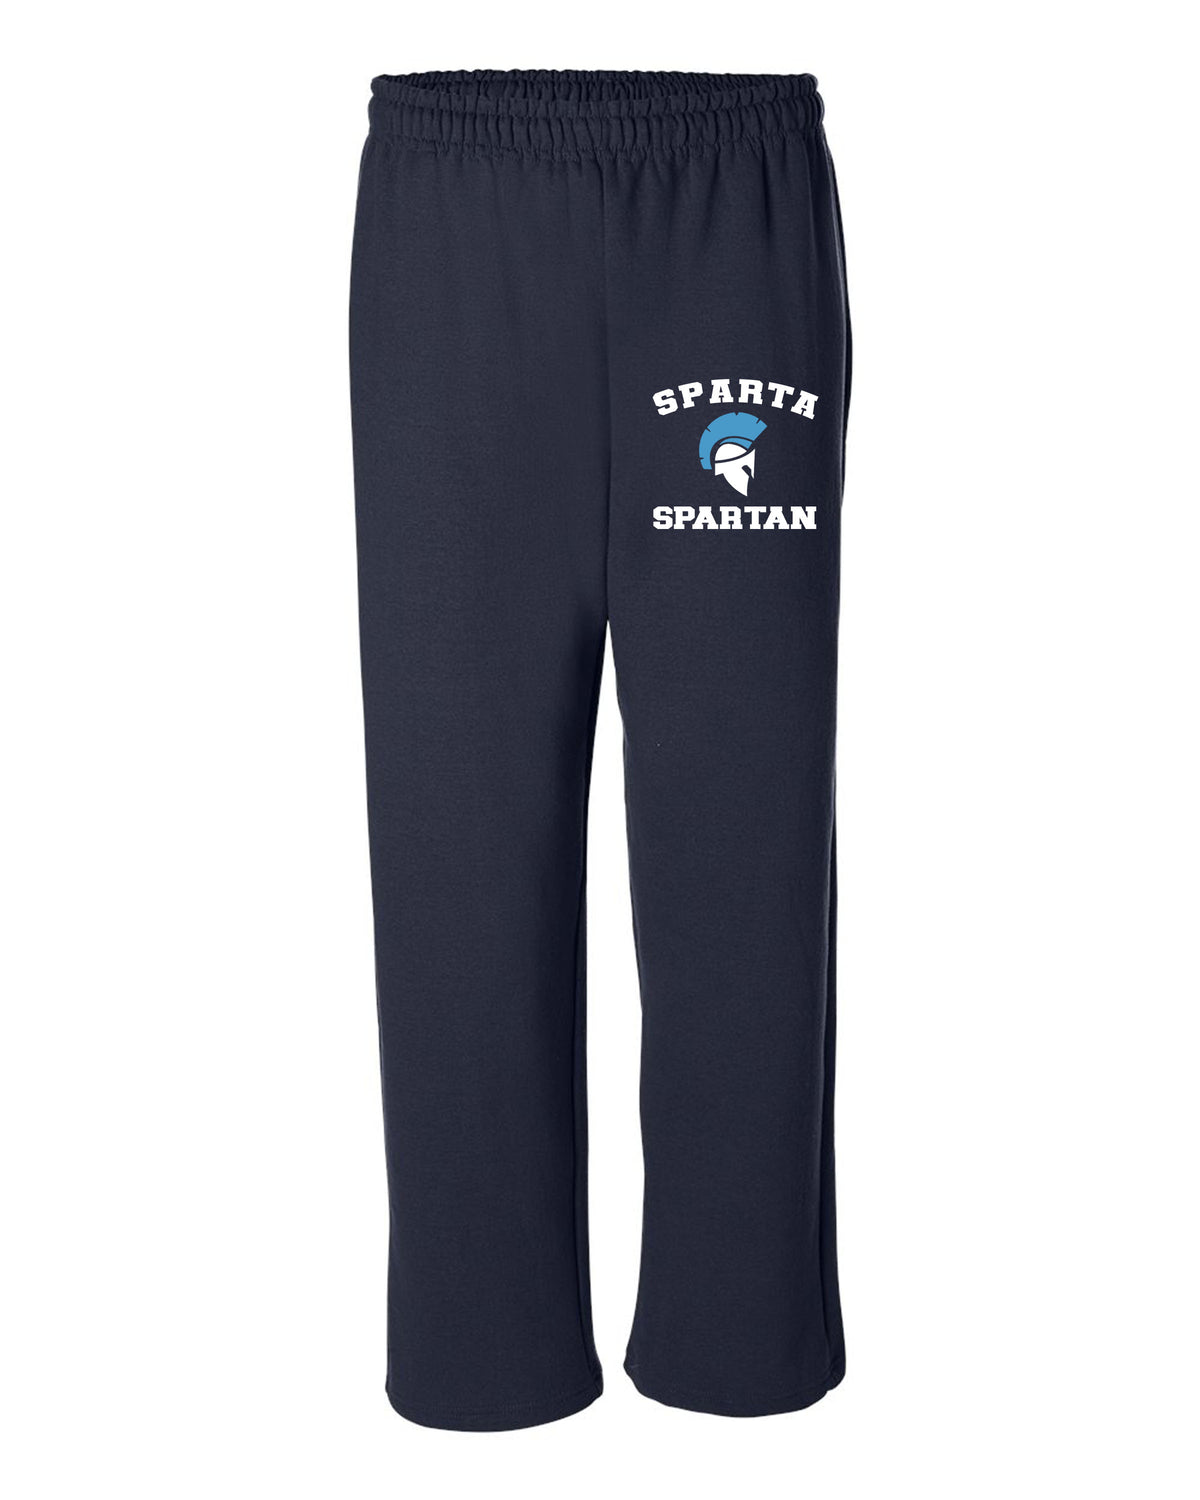 Sparta School Design 1 Open Bottom Sweatpants